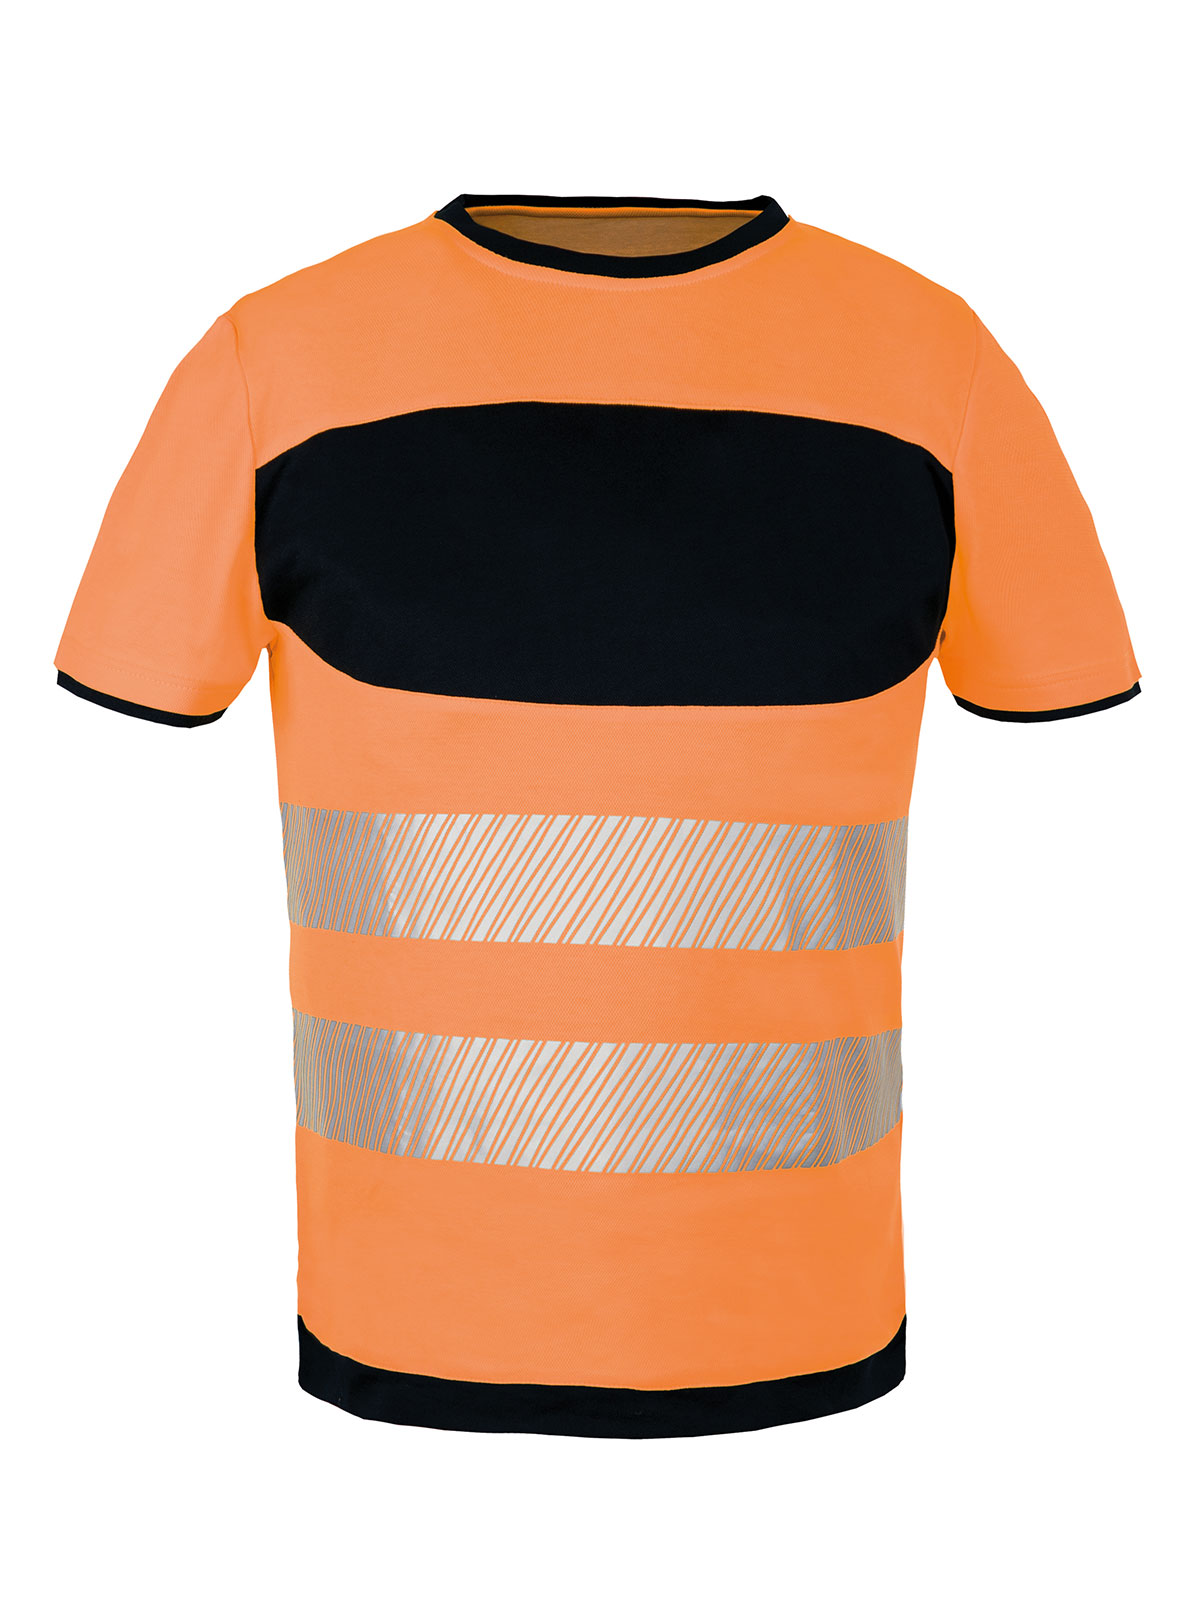 t-shirt-orange-black.webp